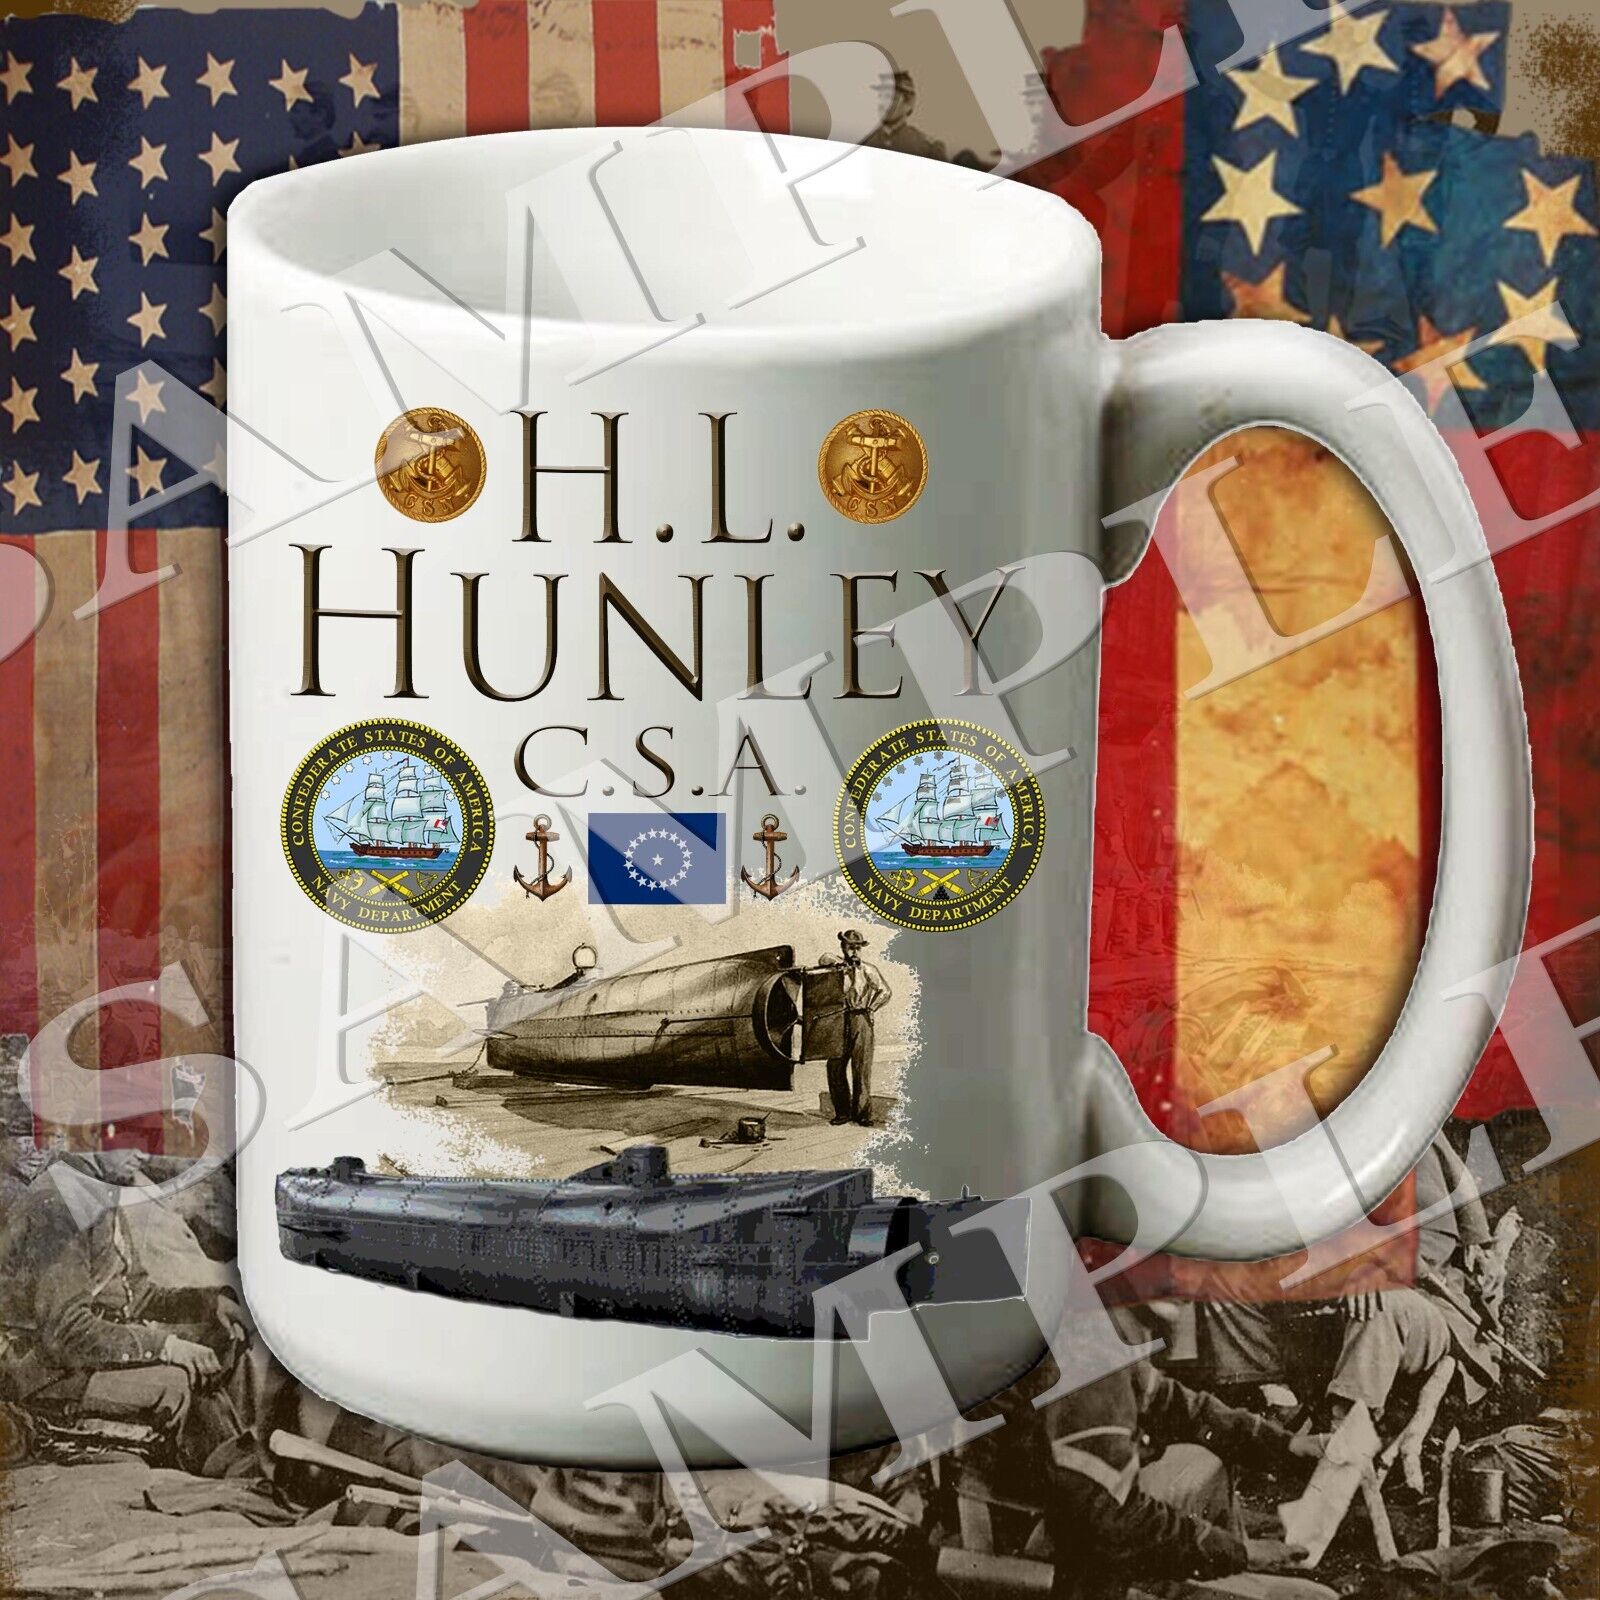 H.L. Hunley Confederate Naval 15-ounce American Civil War themed coffee mug